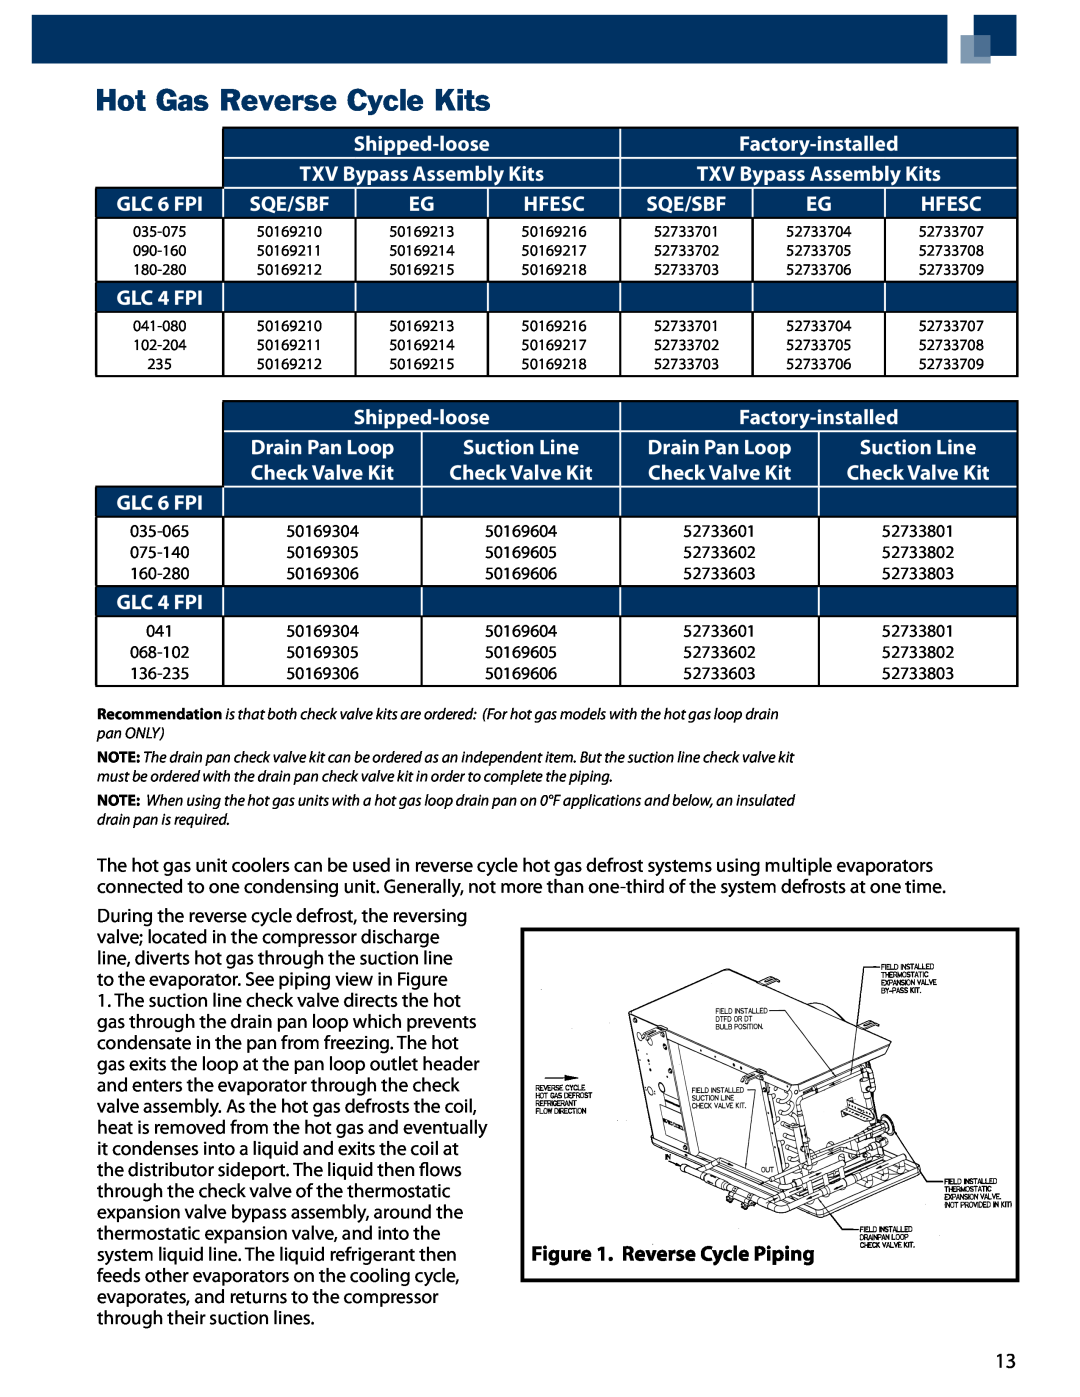 Heatcraft Refrigeration Products RLC, GLC, ELC/EFC manual Hot Gas Reverse Cycle Kits 